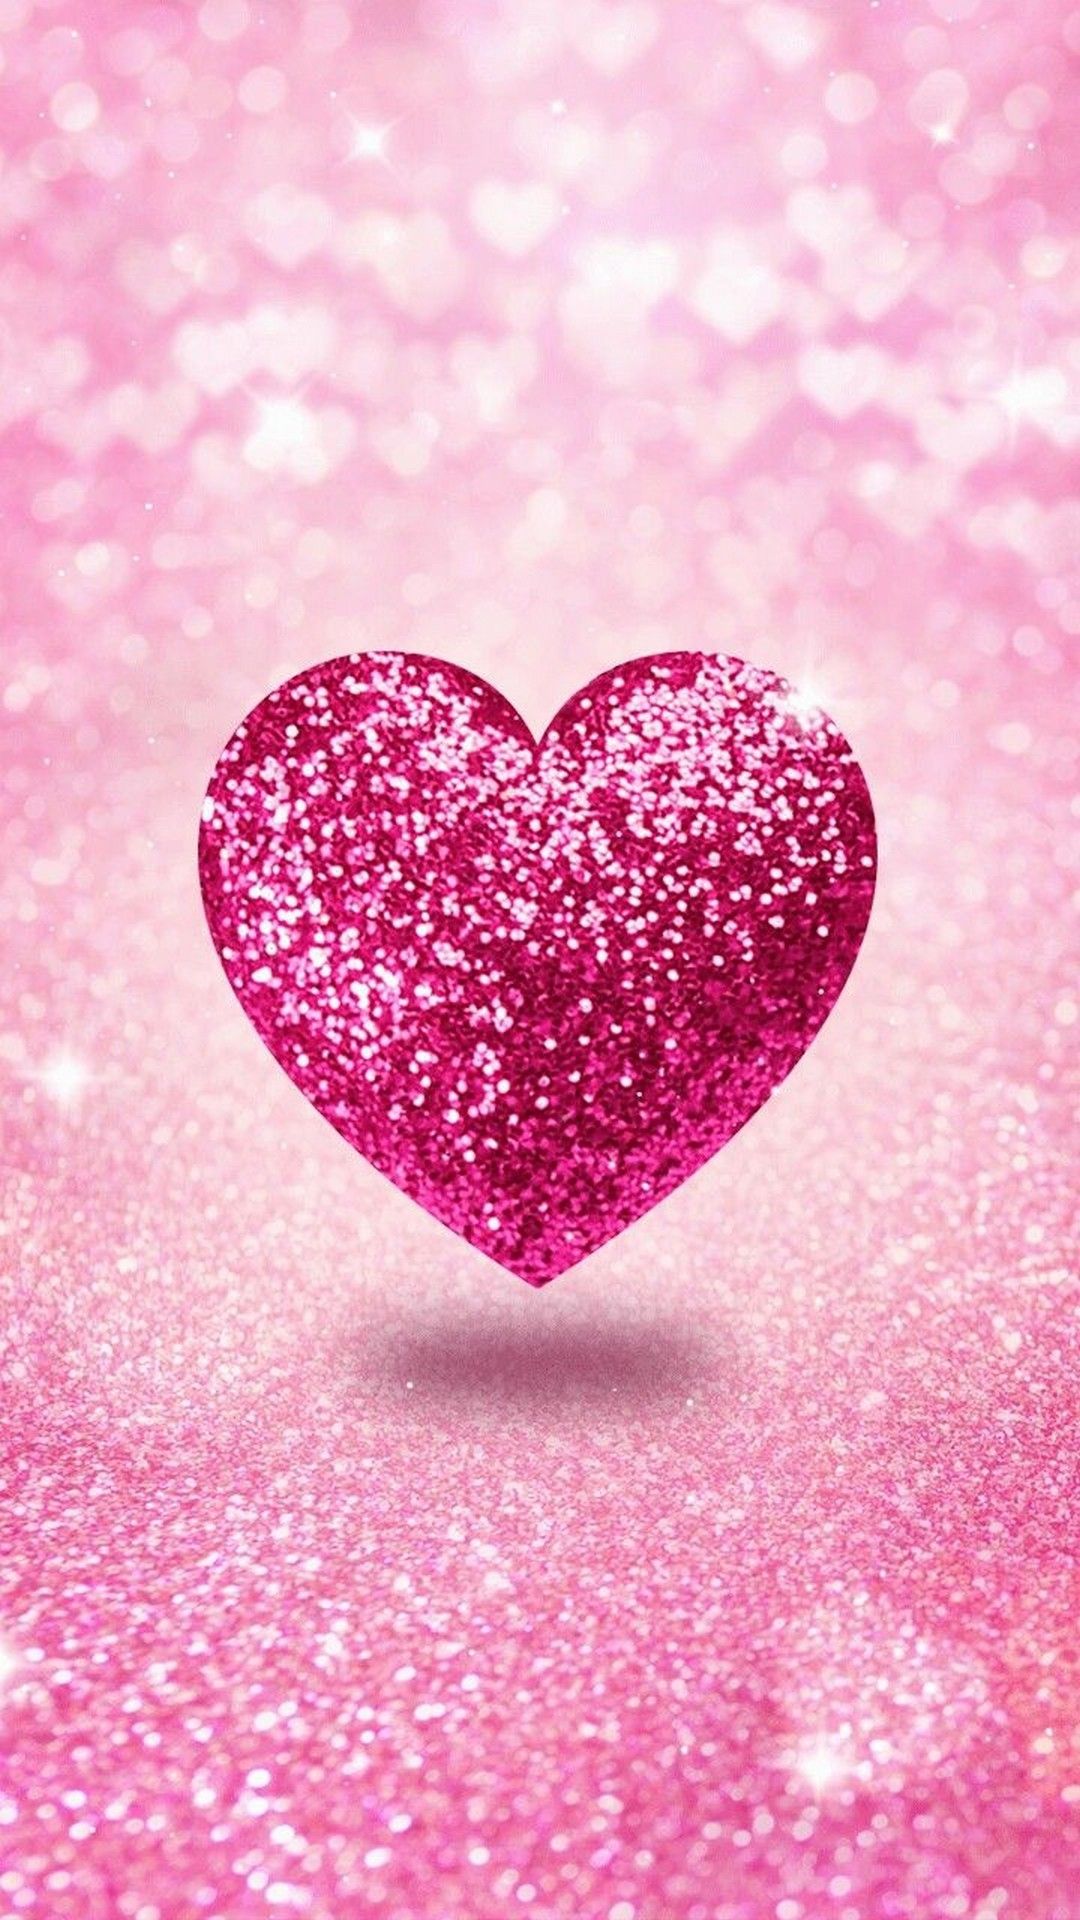 Pink heart Wallpaper Download